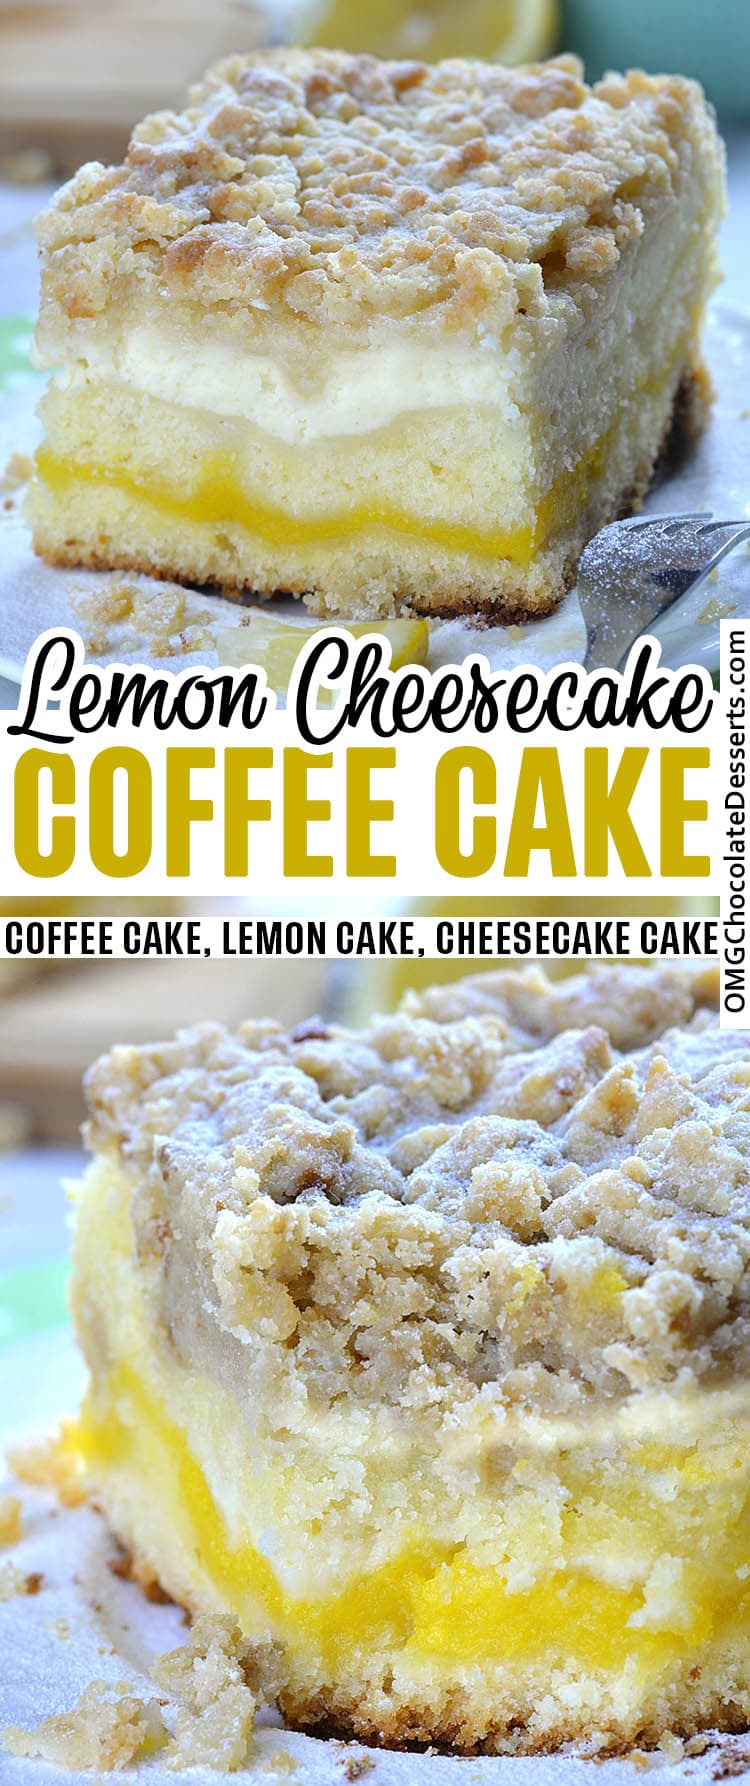 Lemon Coffee Cake | A Breakfast Coffee Cake Recipe with Lemon Curd